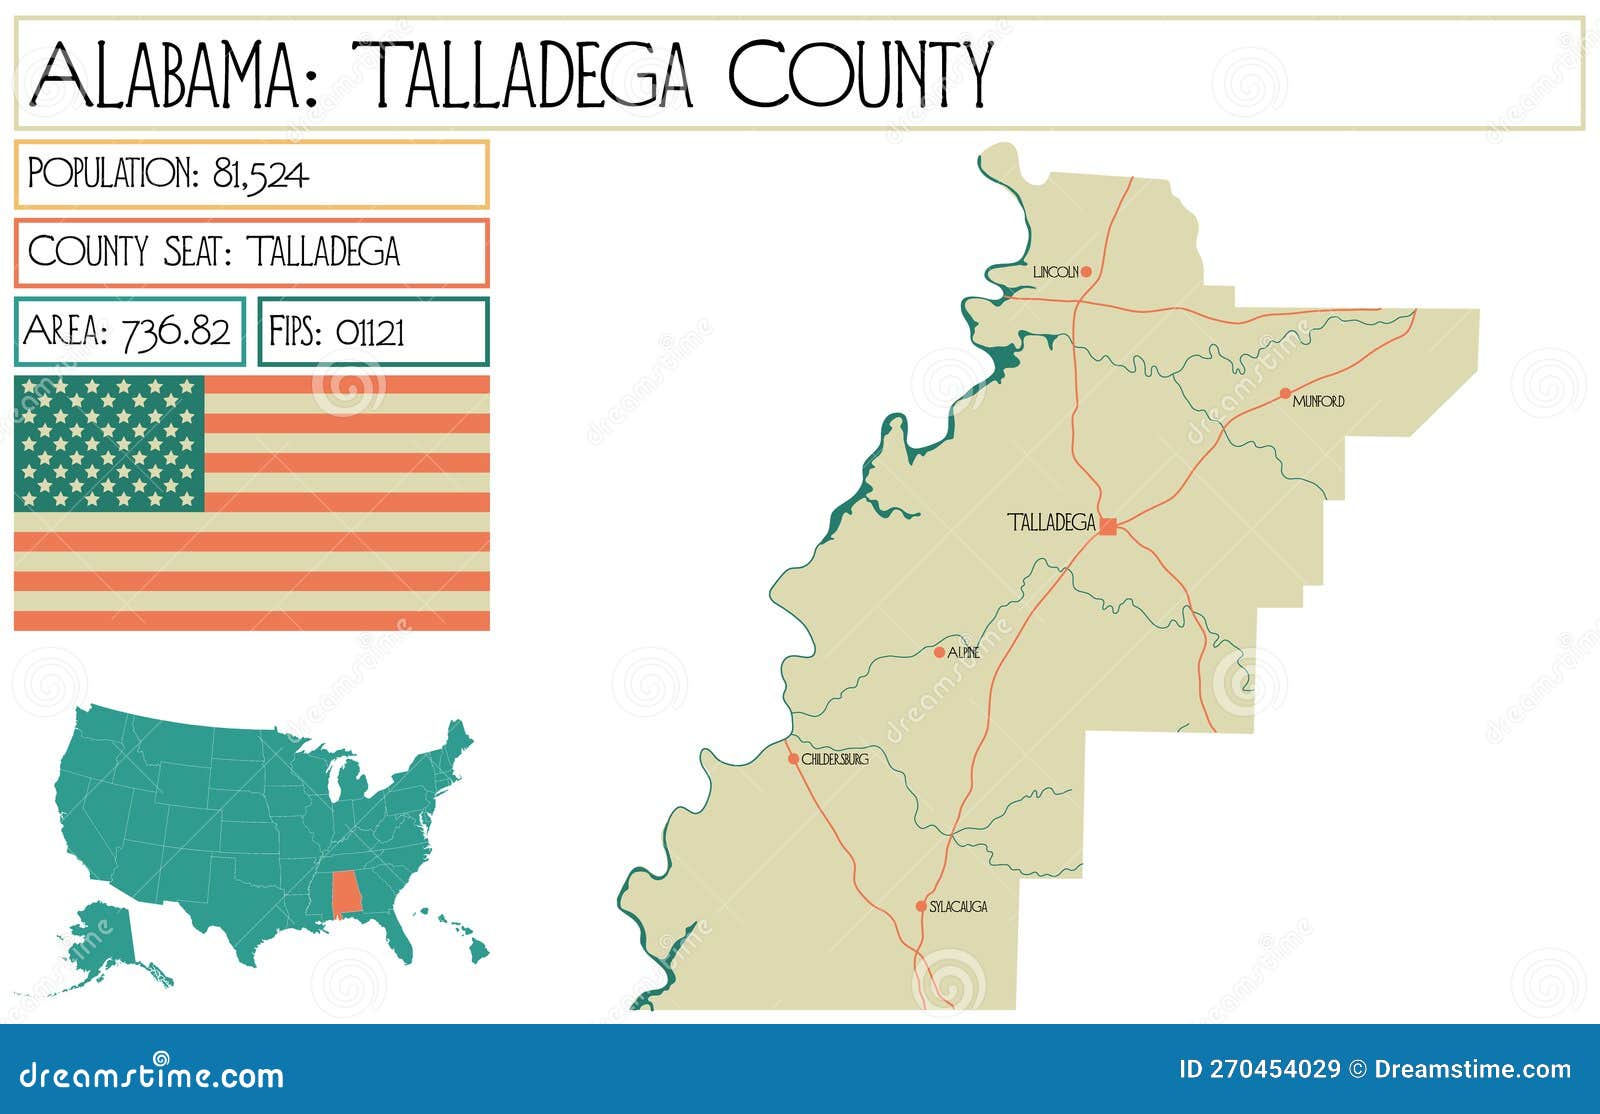 map of talladega county in alabama, usa.